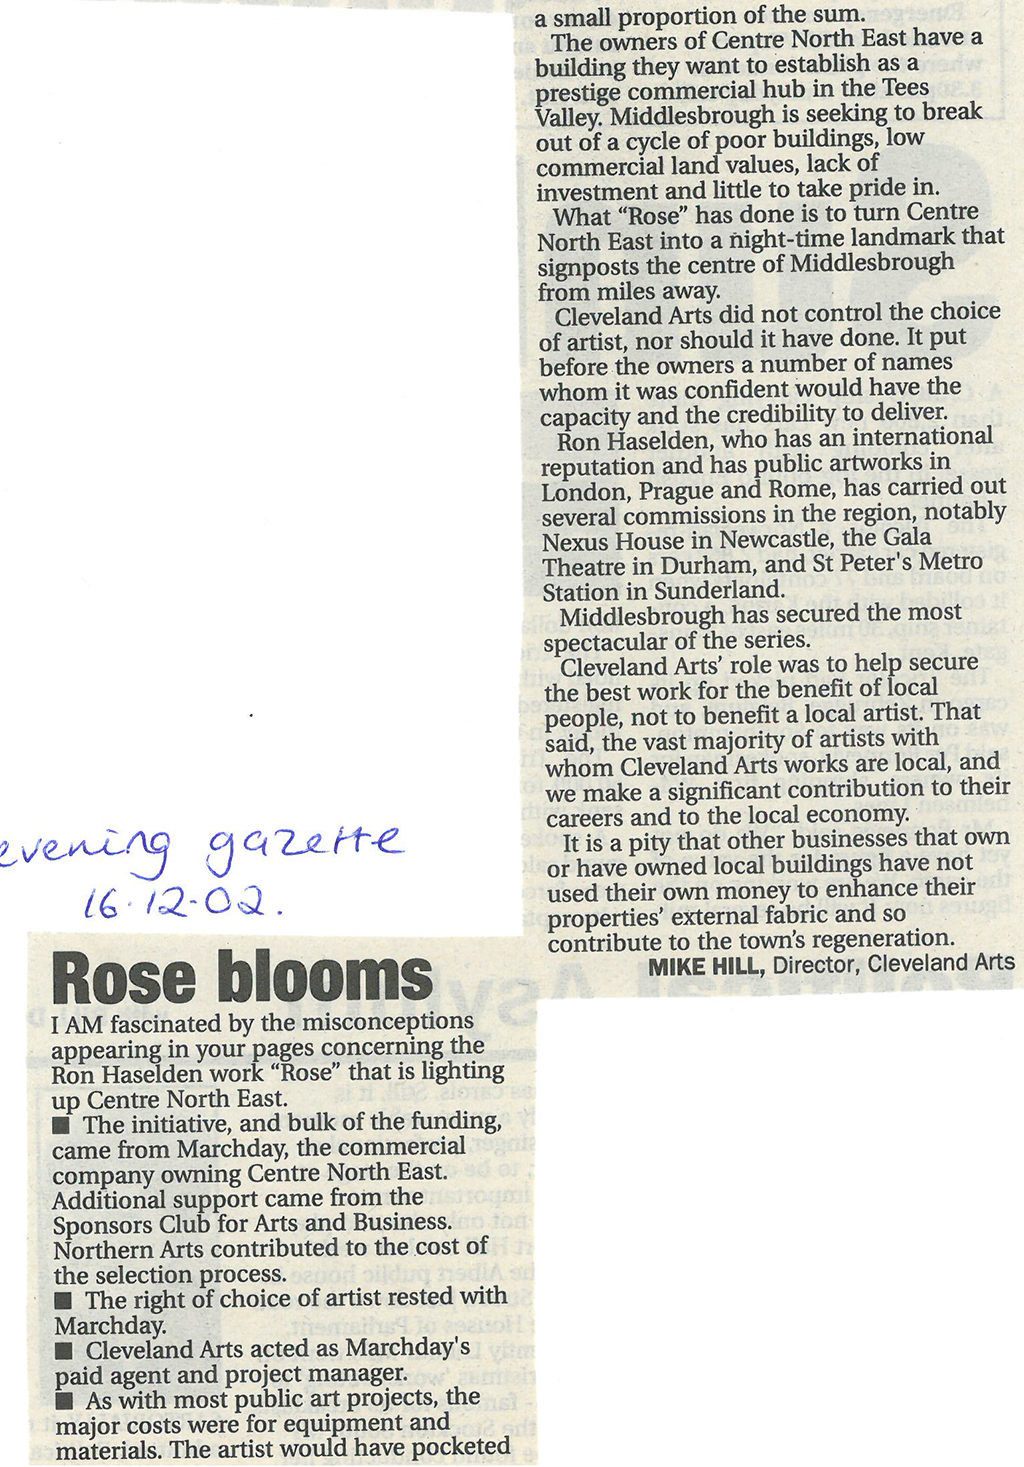 2002-12-16, Evening Gazette